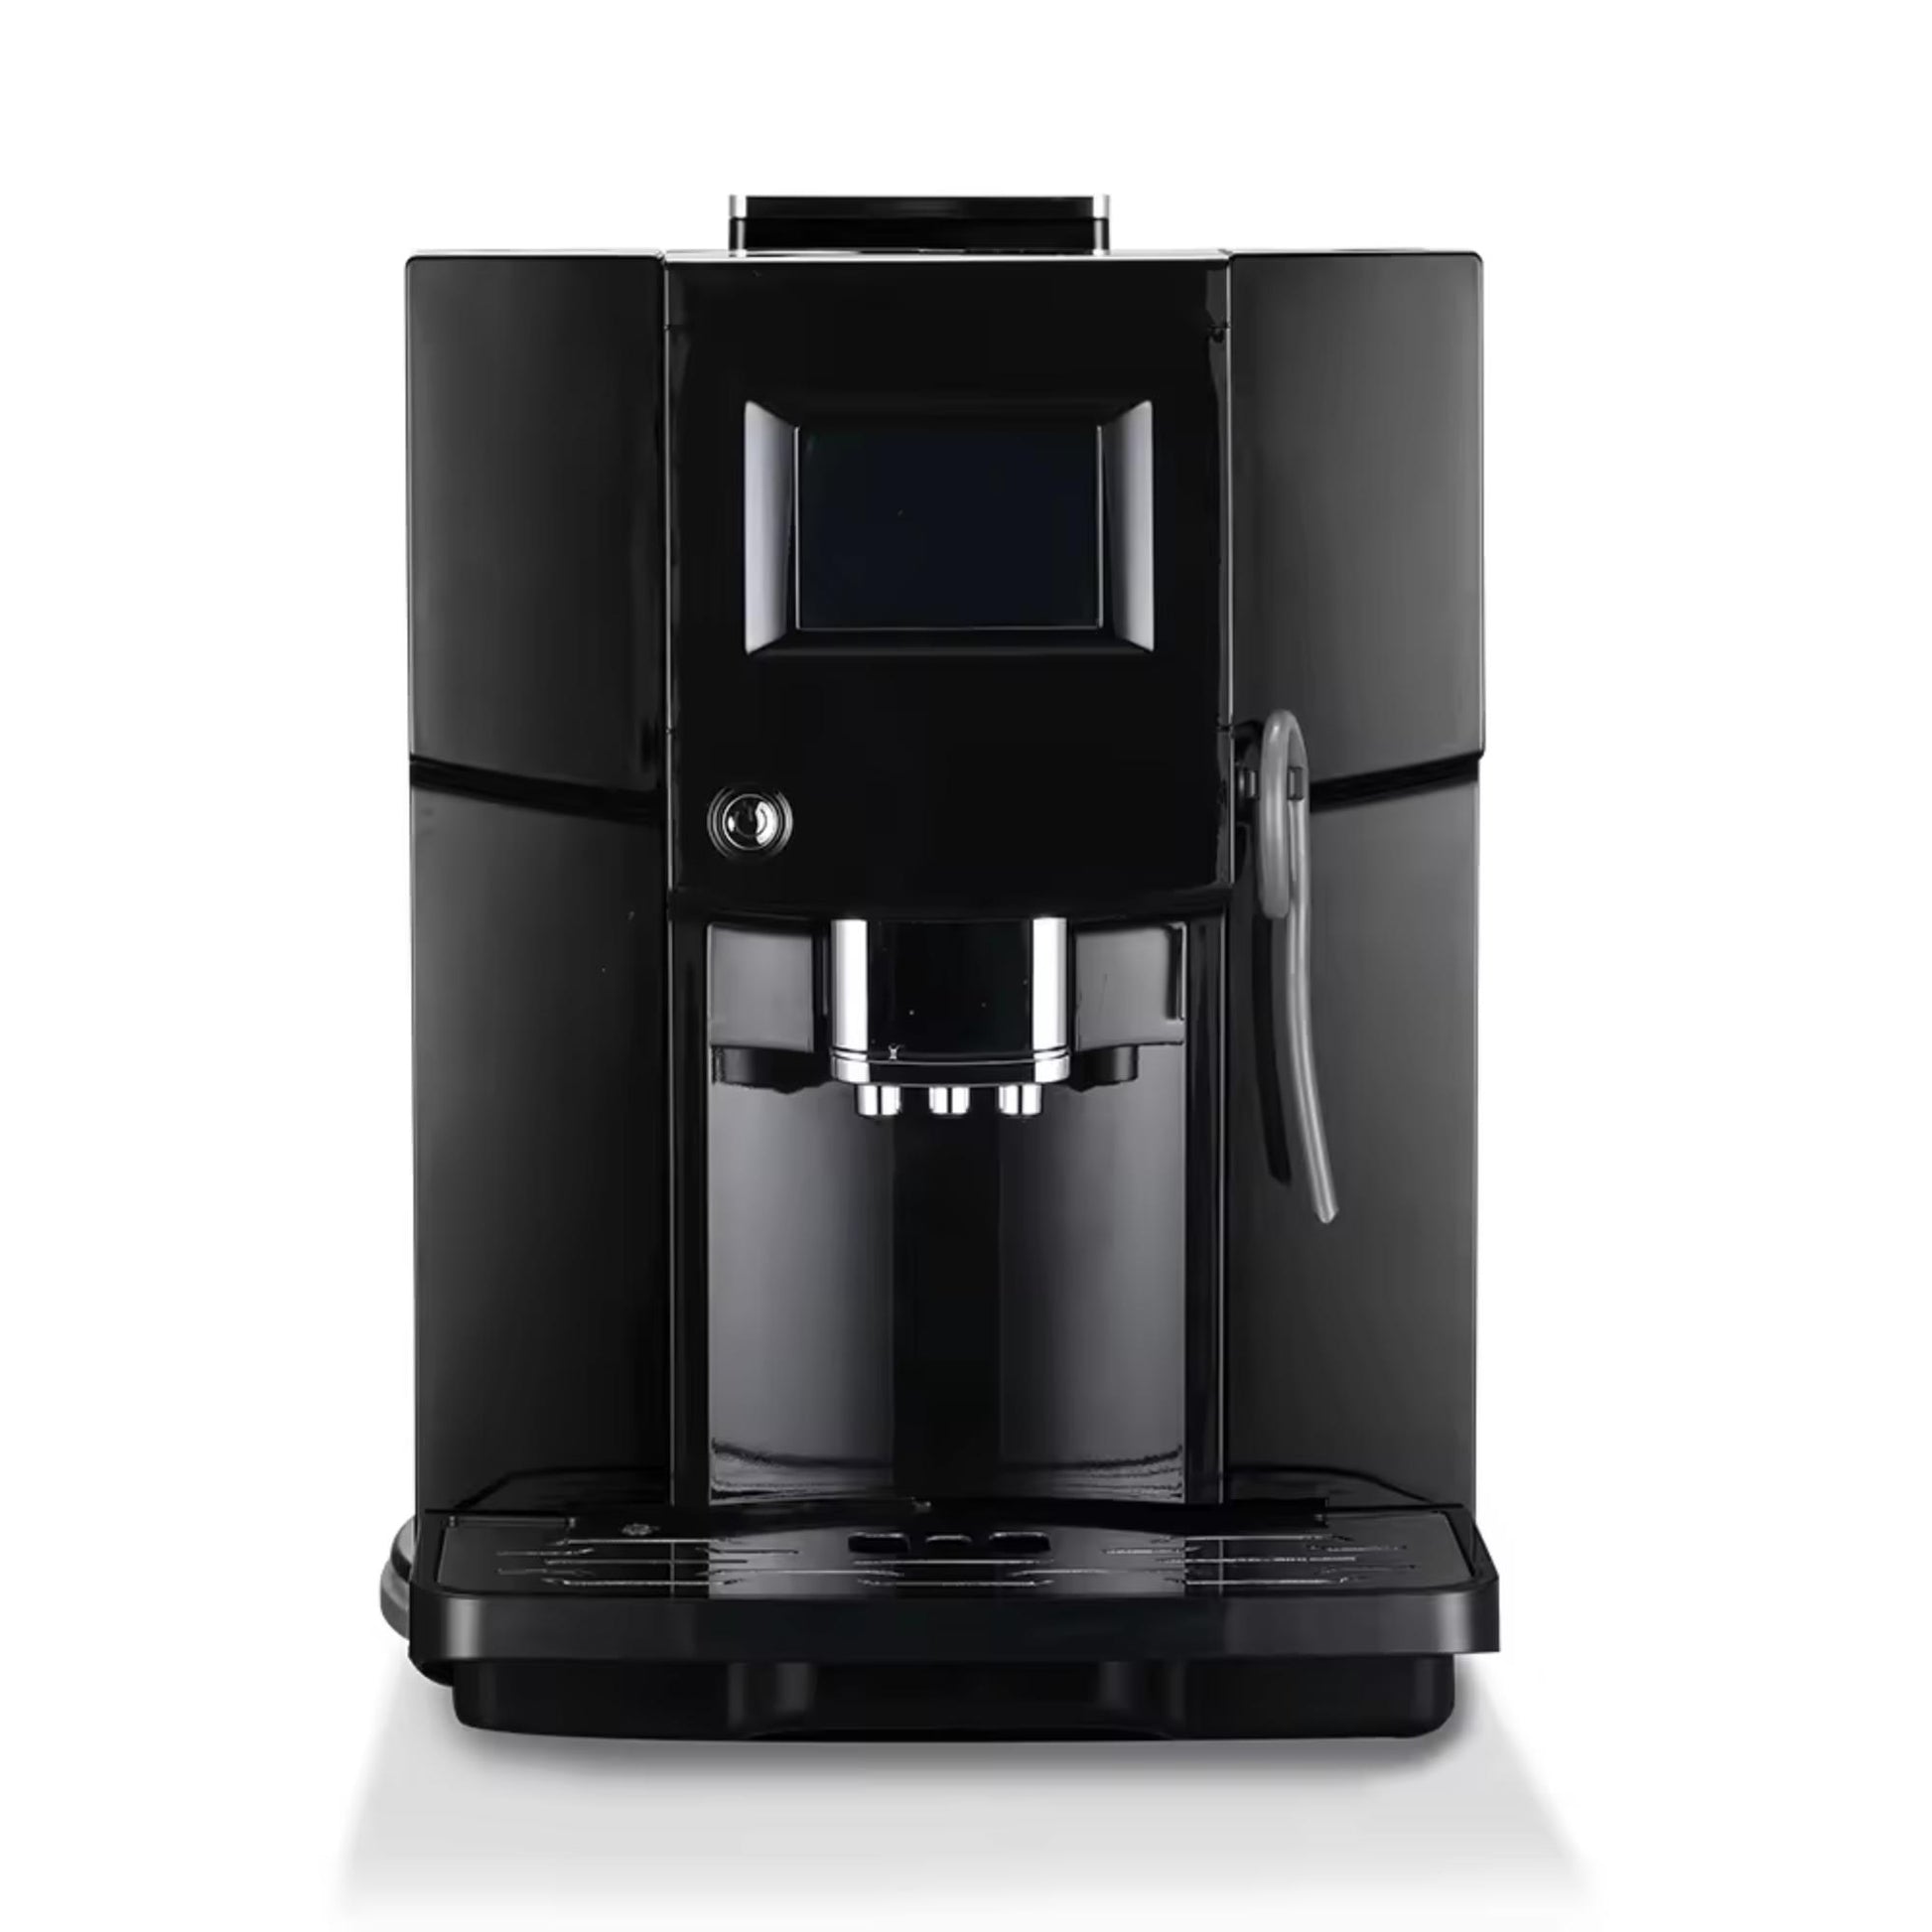 Colet Q006 Automatische Kaffeemaschine: One-Touch-Brühung mit 19-Bar ULKA Pumpe. | Blue Chilli Electronics.